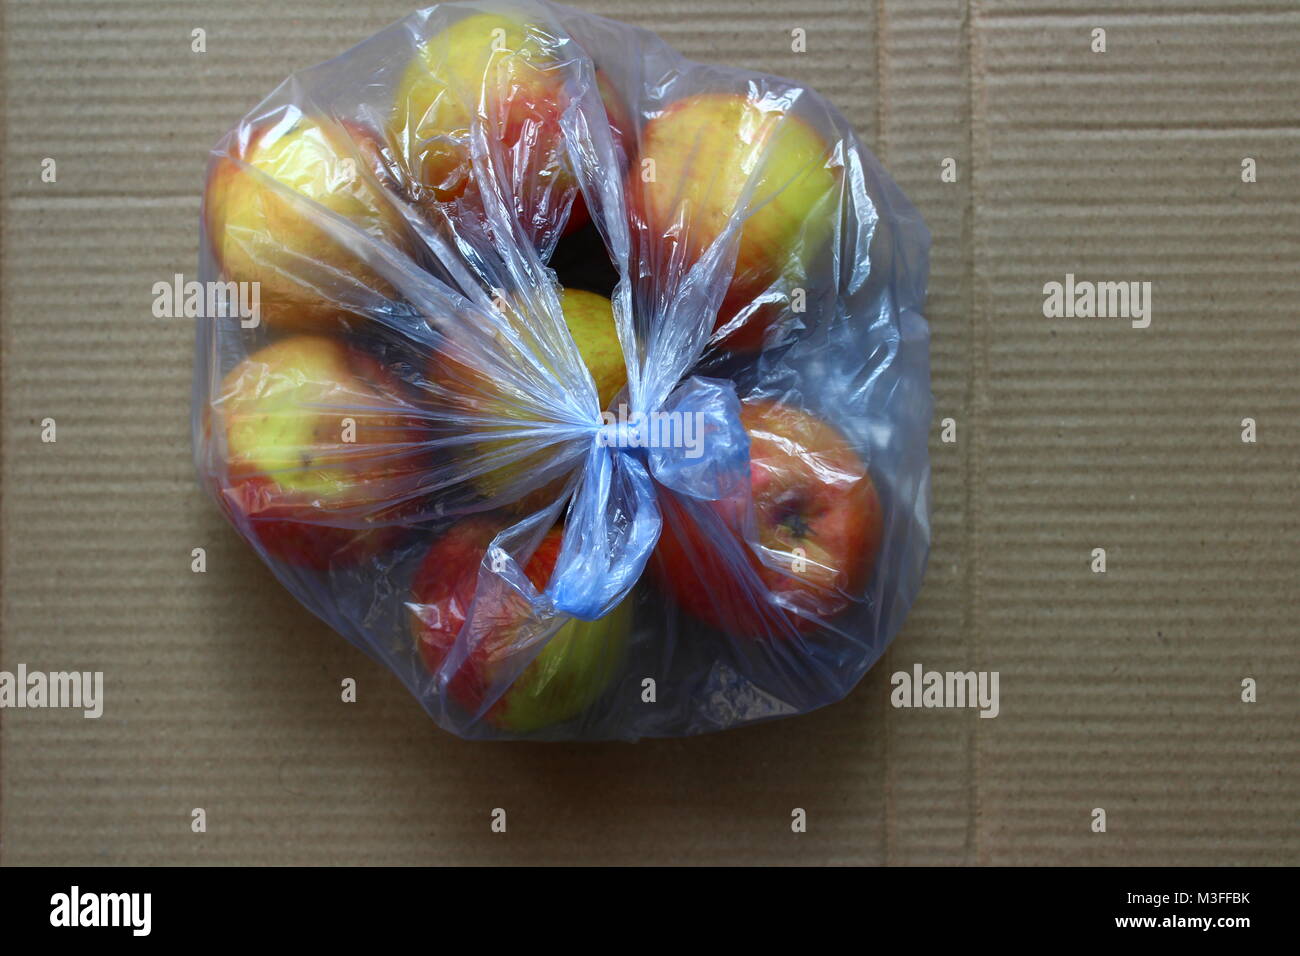 Apples in polythene bag Stock Photo